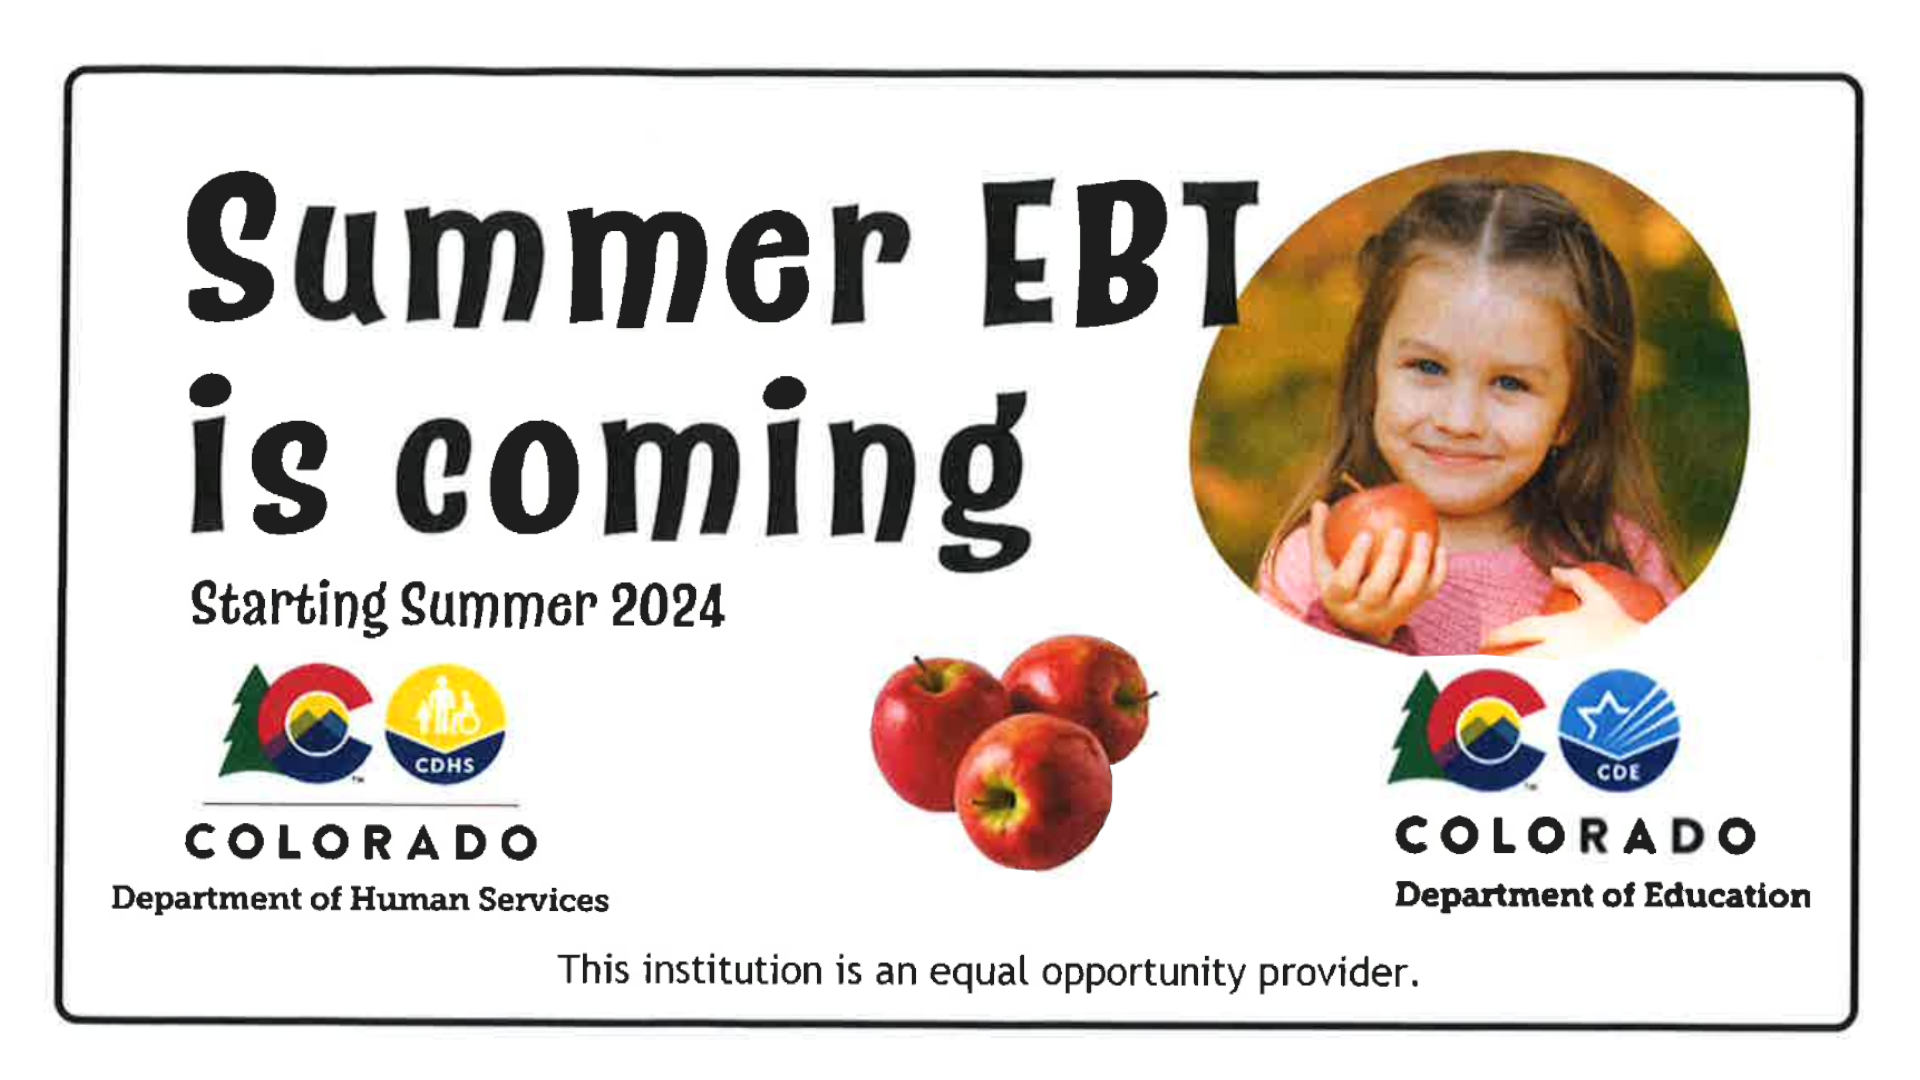 Summer EBT Information